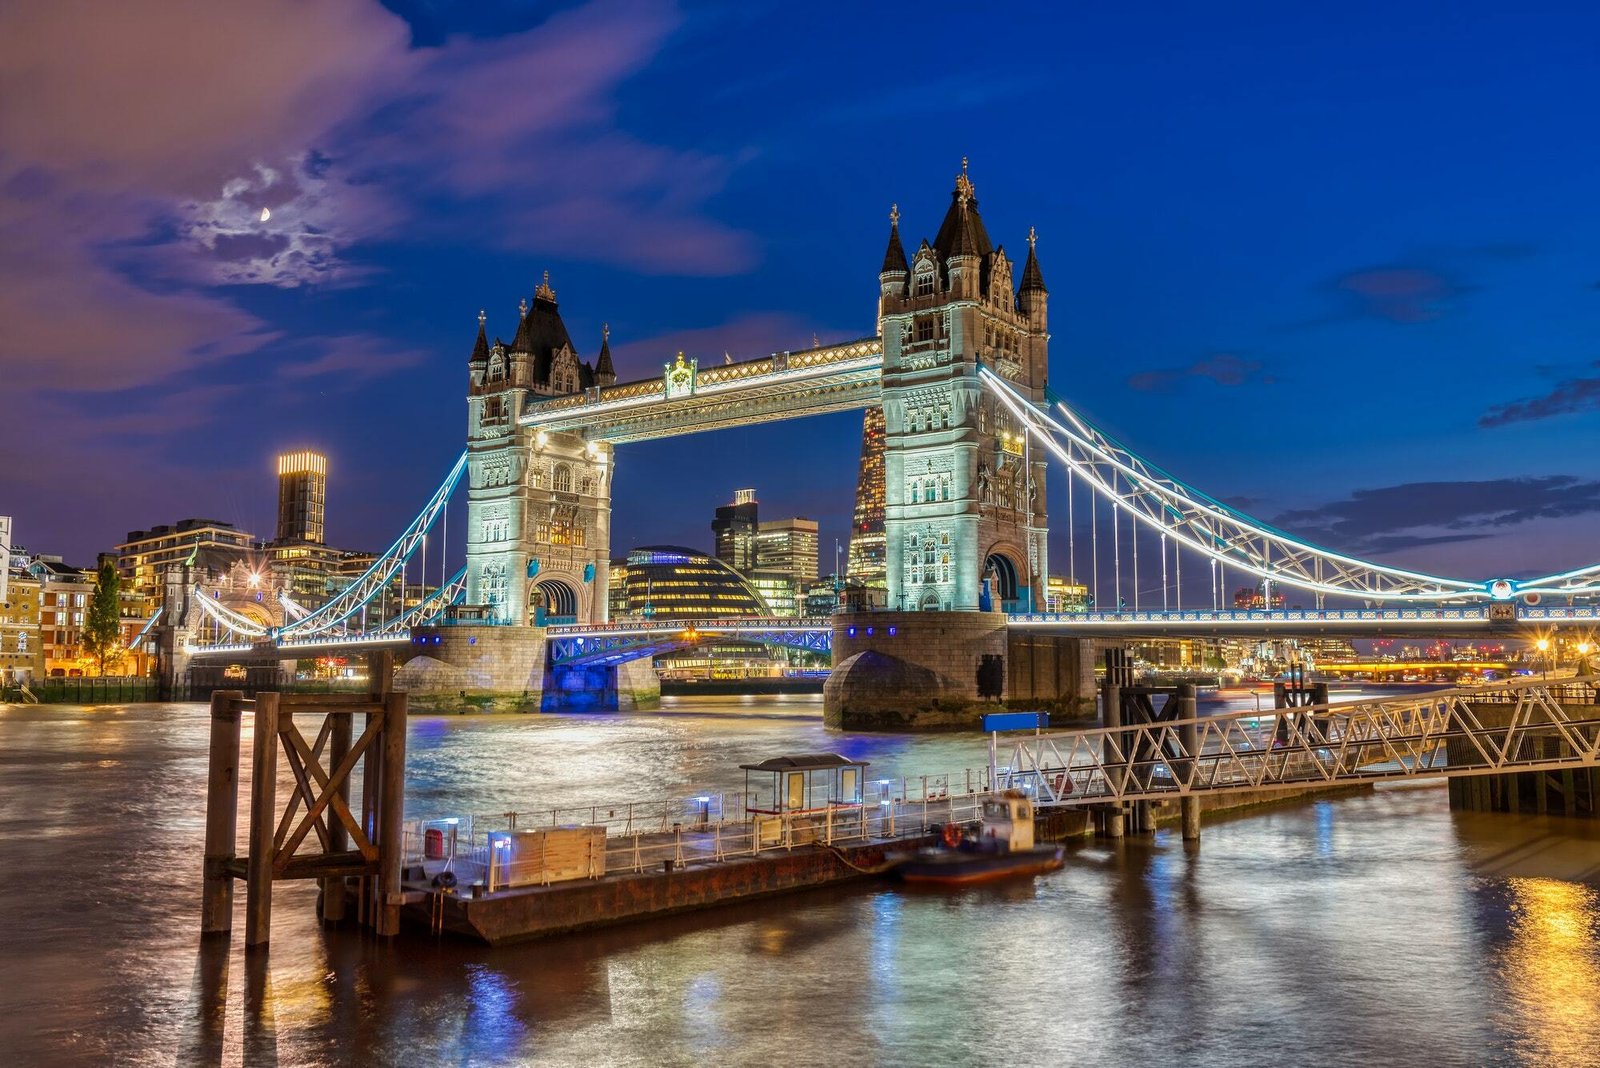 The illuminated Tower Bridge in London, UK